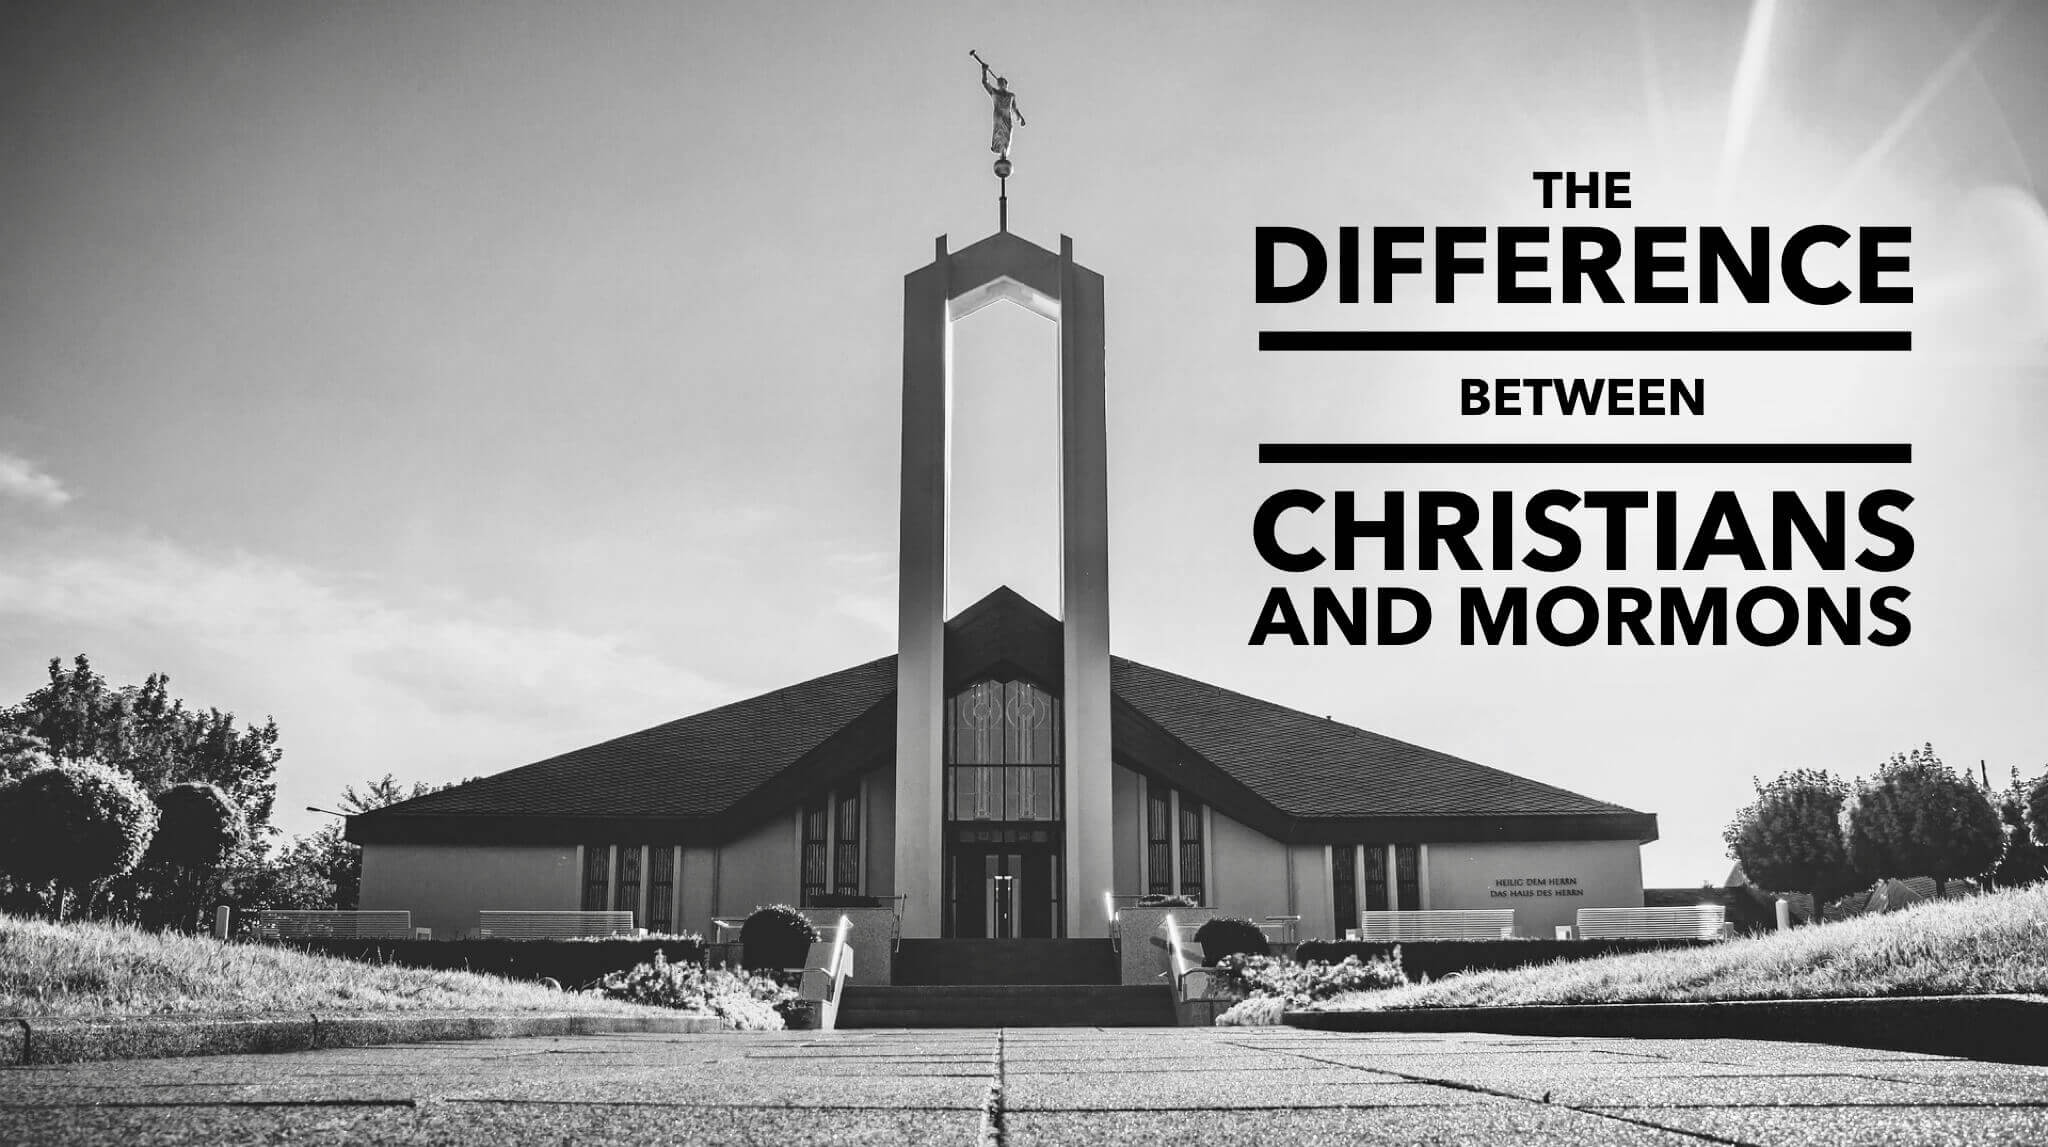 Mormonism Vs Christianity Comparison Chart